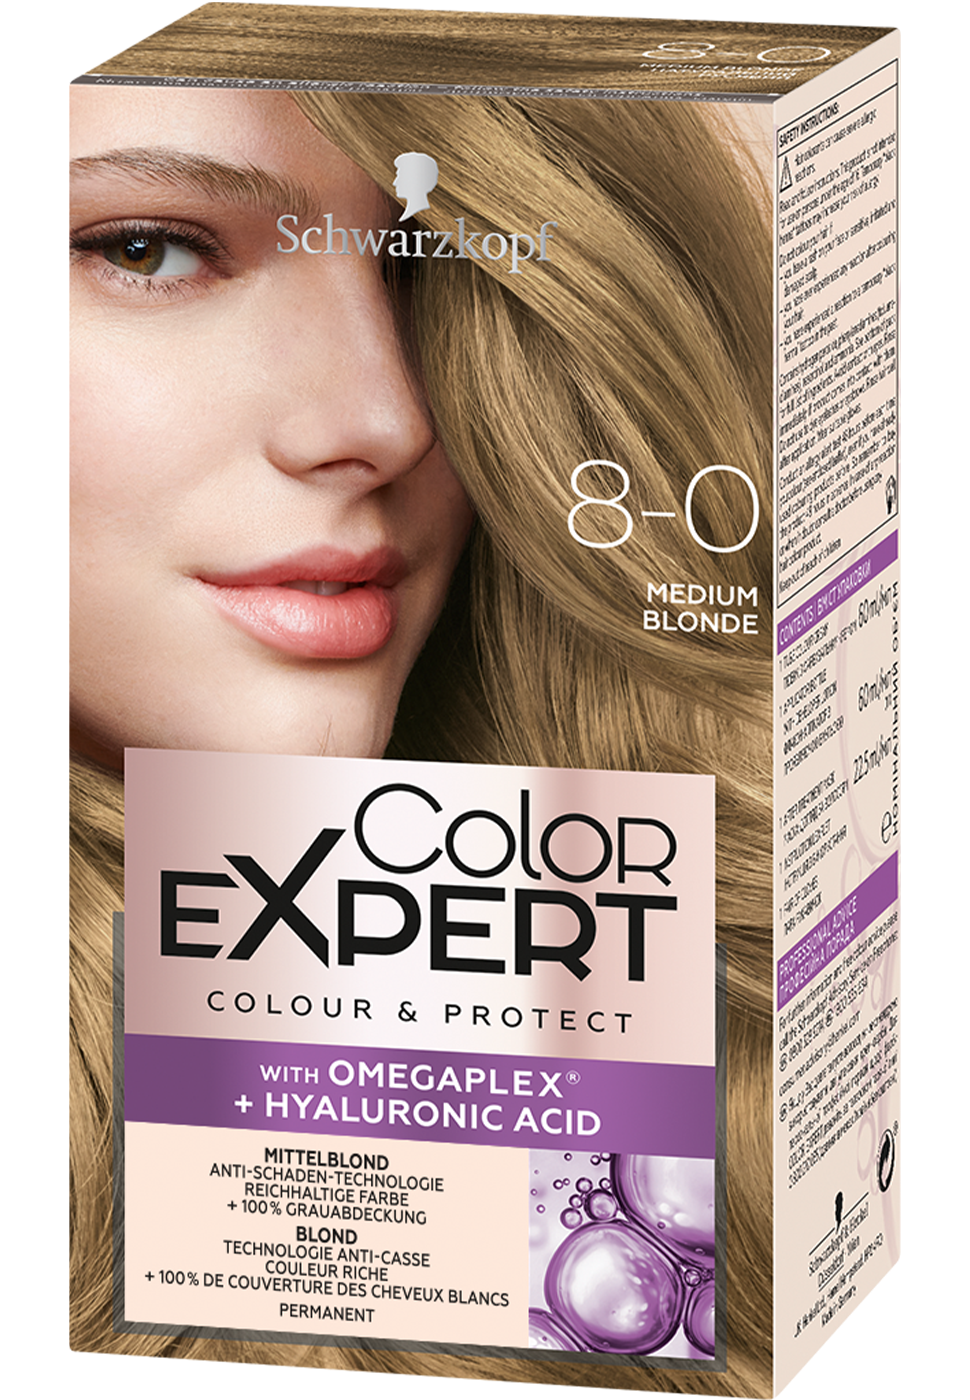 Erfahrung color expert dunkelblond COLOR EXPERT